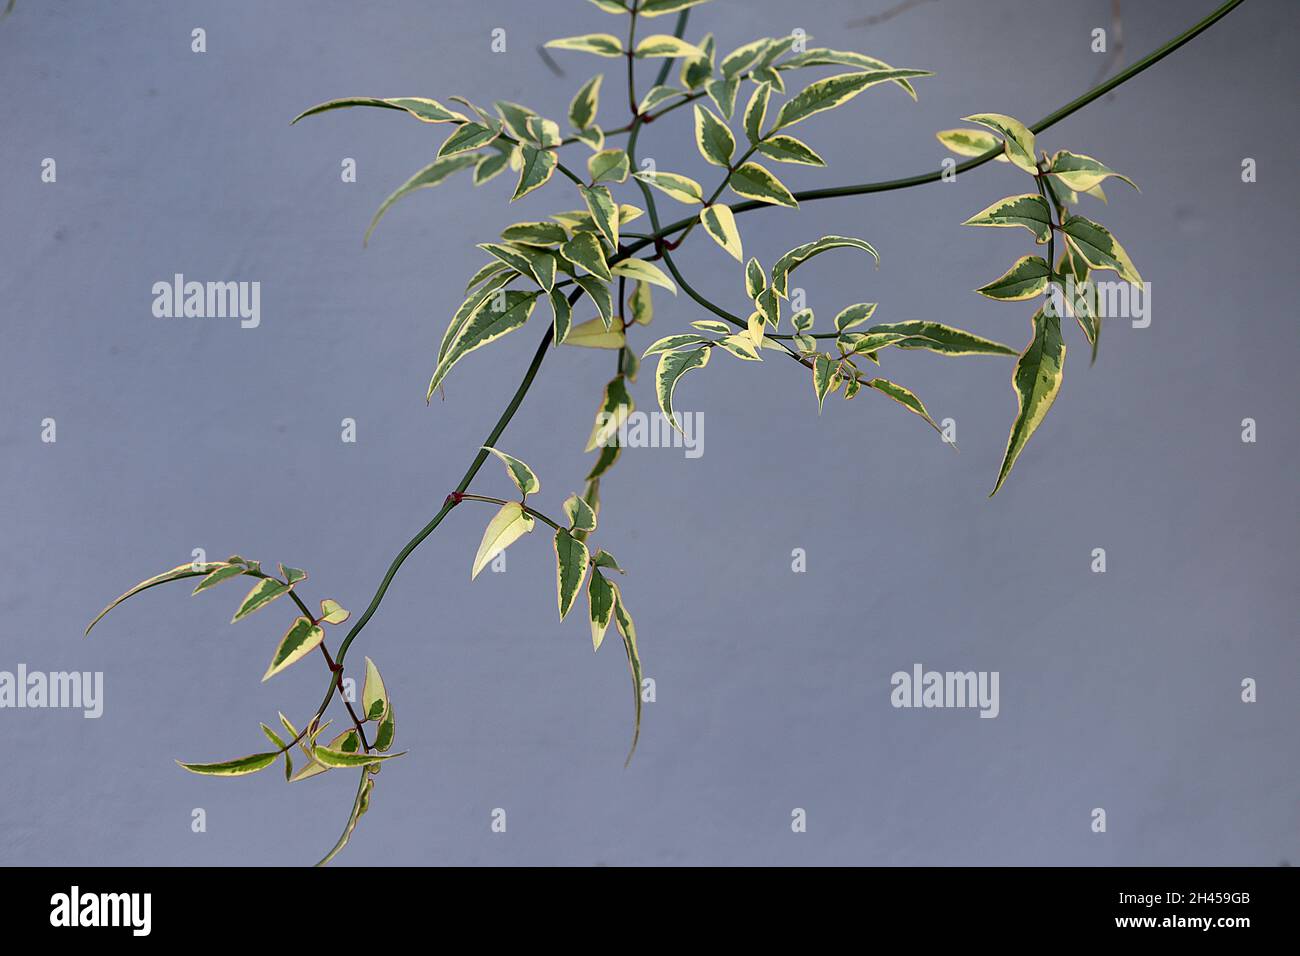 Jasminum officinalis ‘Variegatum’ Jasmine Argenteovariegatum – grey green pointed leaves with irregular cream margins,  October, England, UK Stock Photo